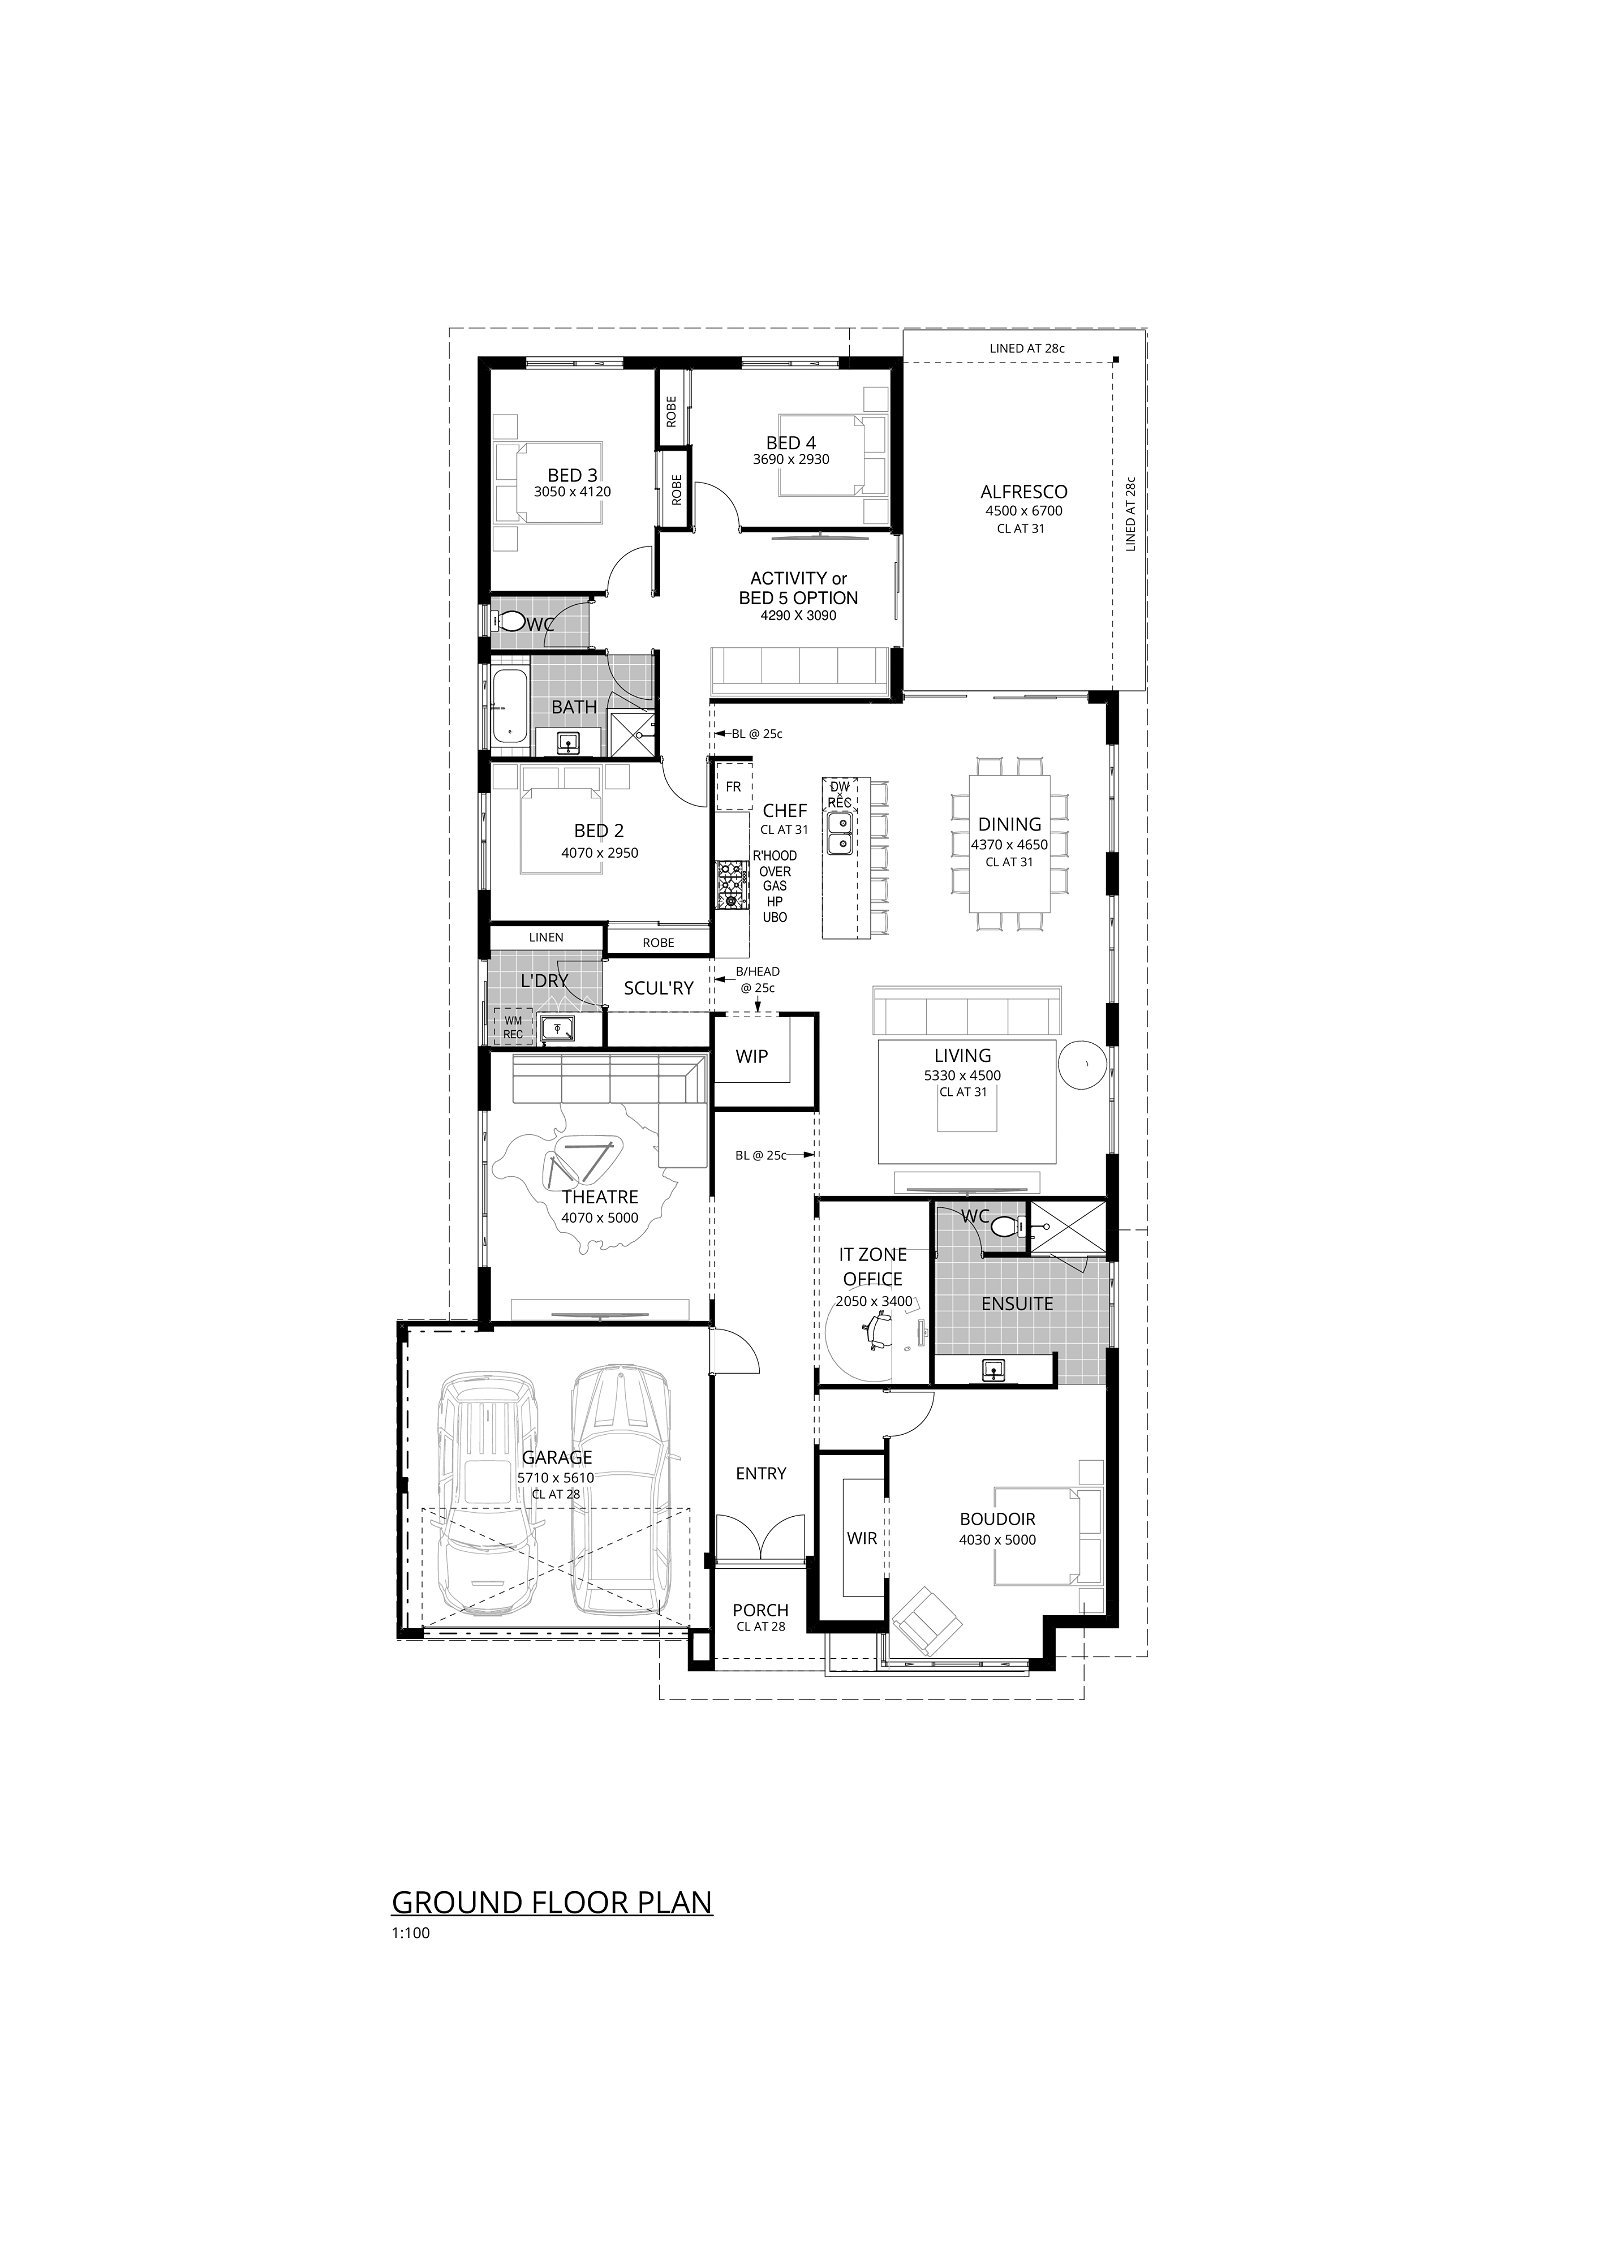 Residential Attitudes - Harmony Haven | 5 Bed - Floorplan - Harmony Haven Brochure Plan